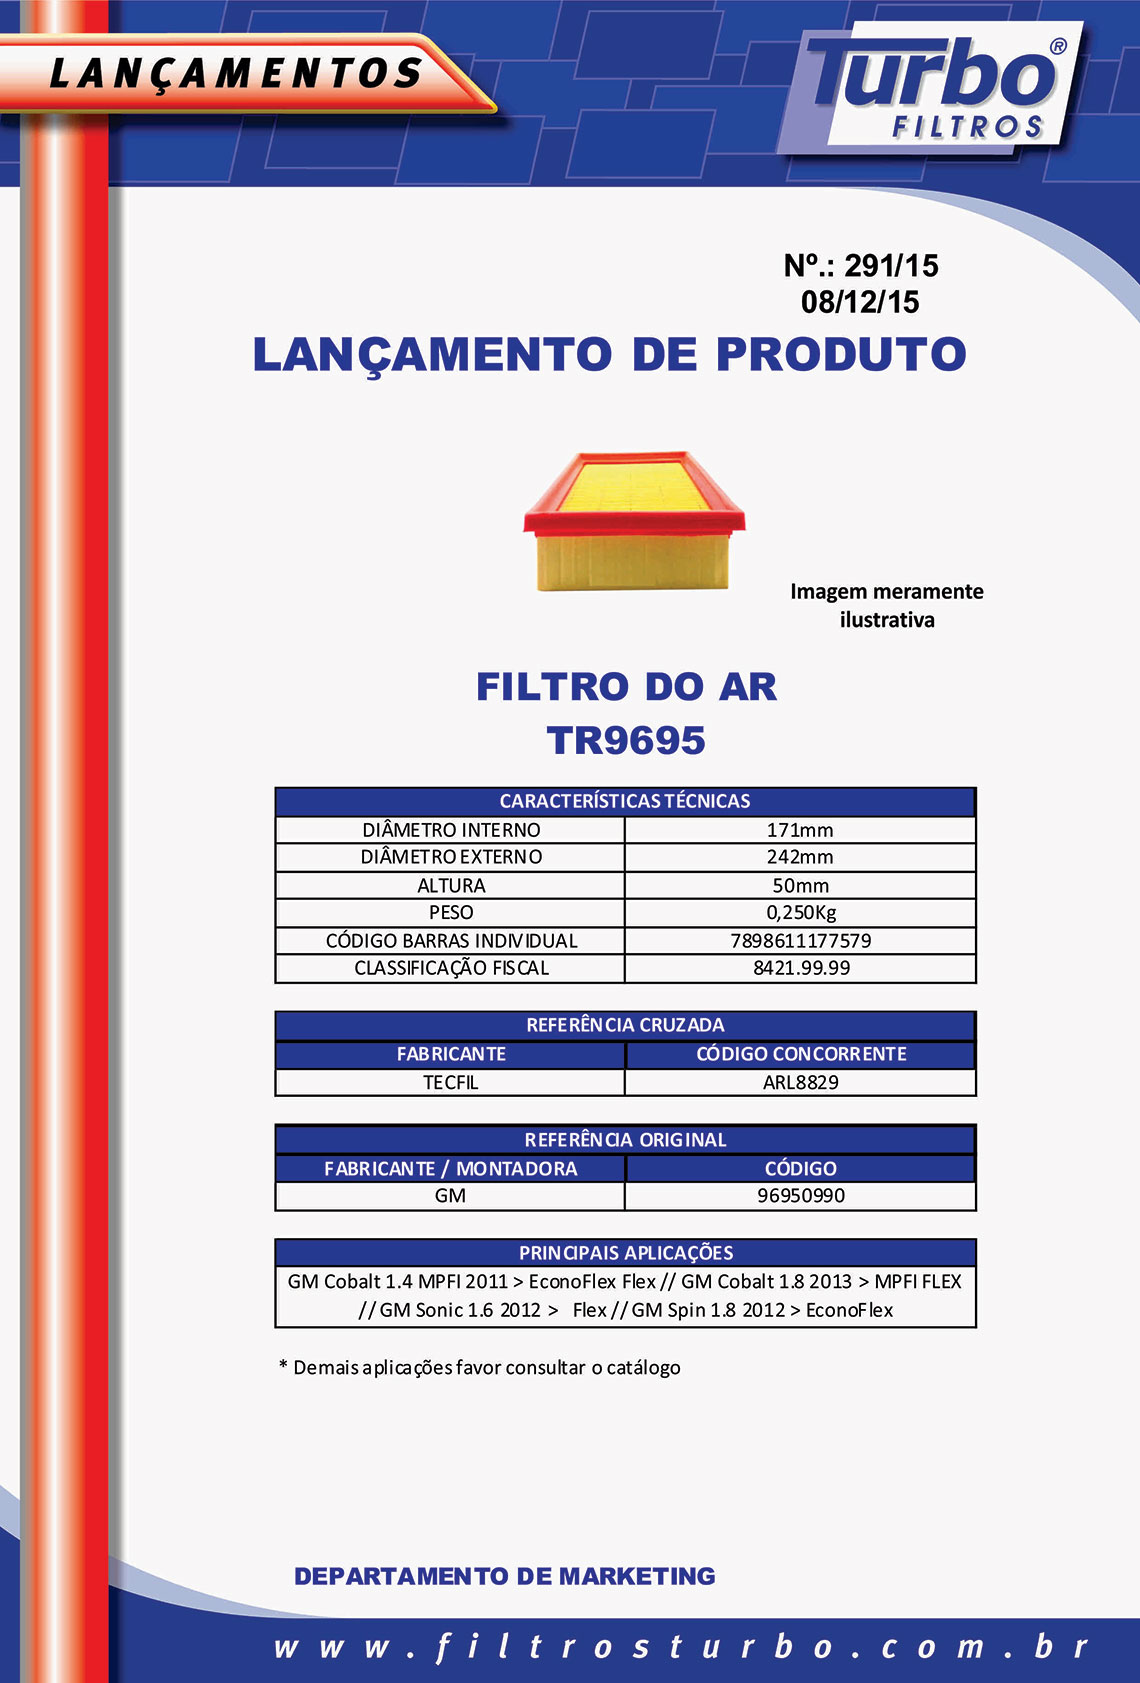 Turbofiltro Comercio De Pecas Ltda em Diadema, SP